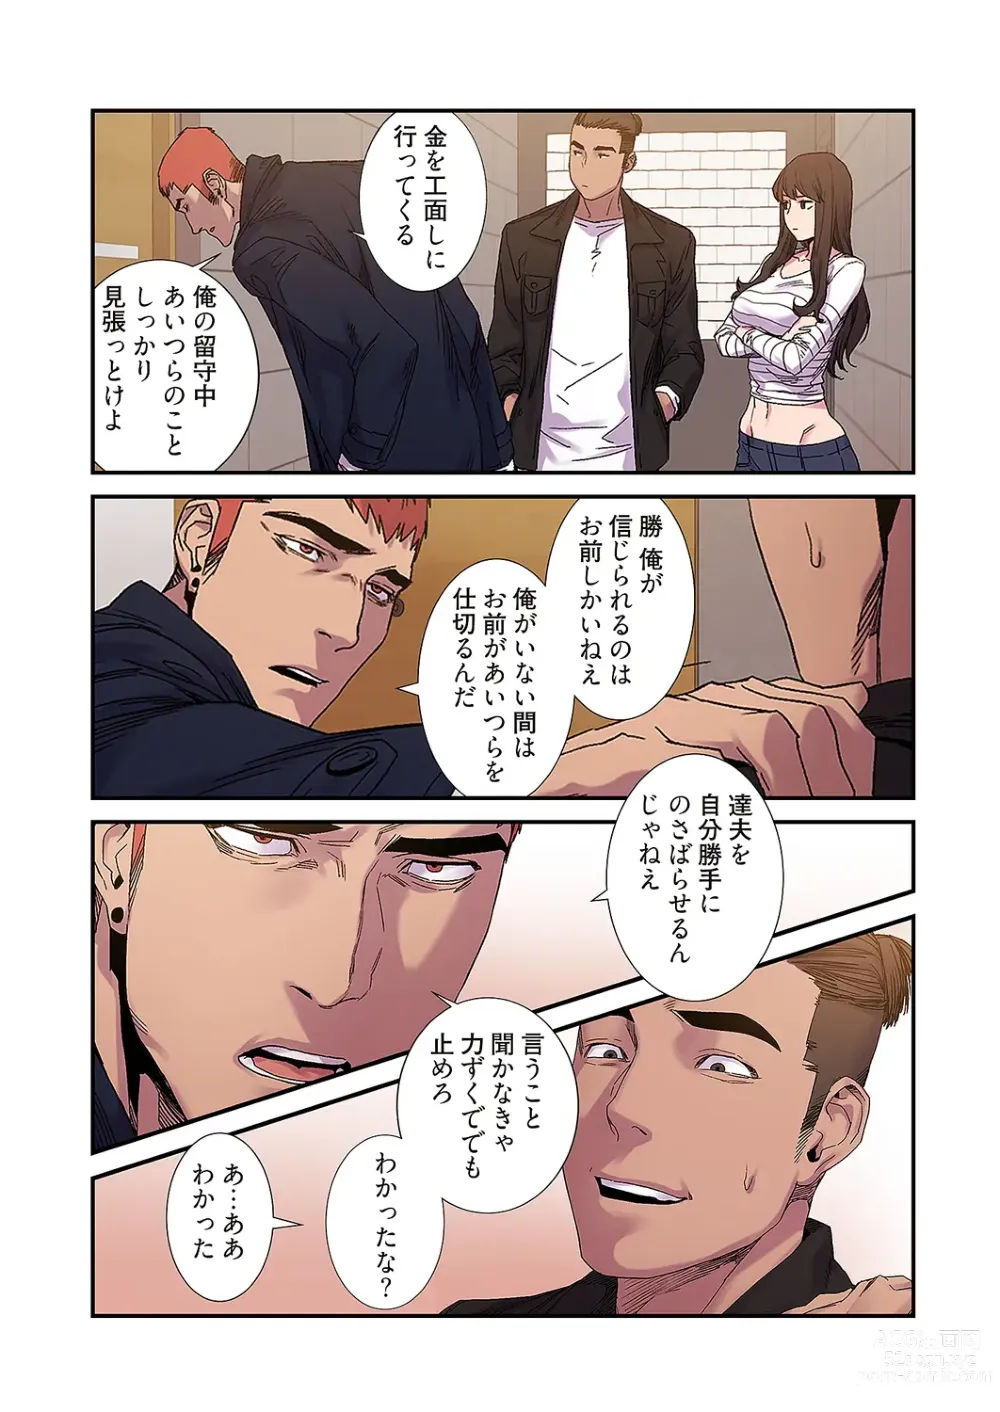 Page 139 of manga Seizan Tobaku (Special Edition) 2